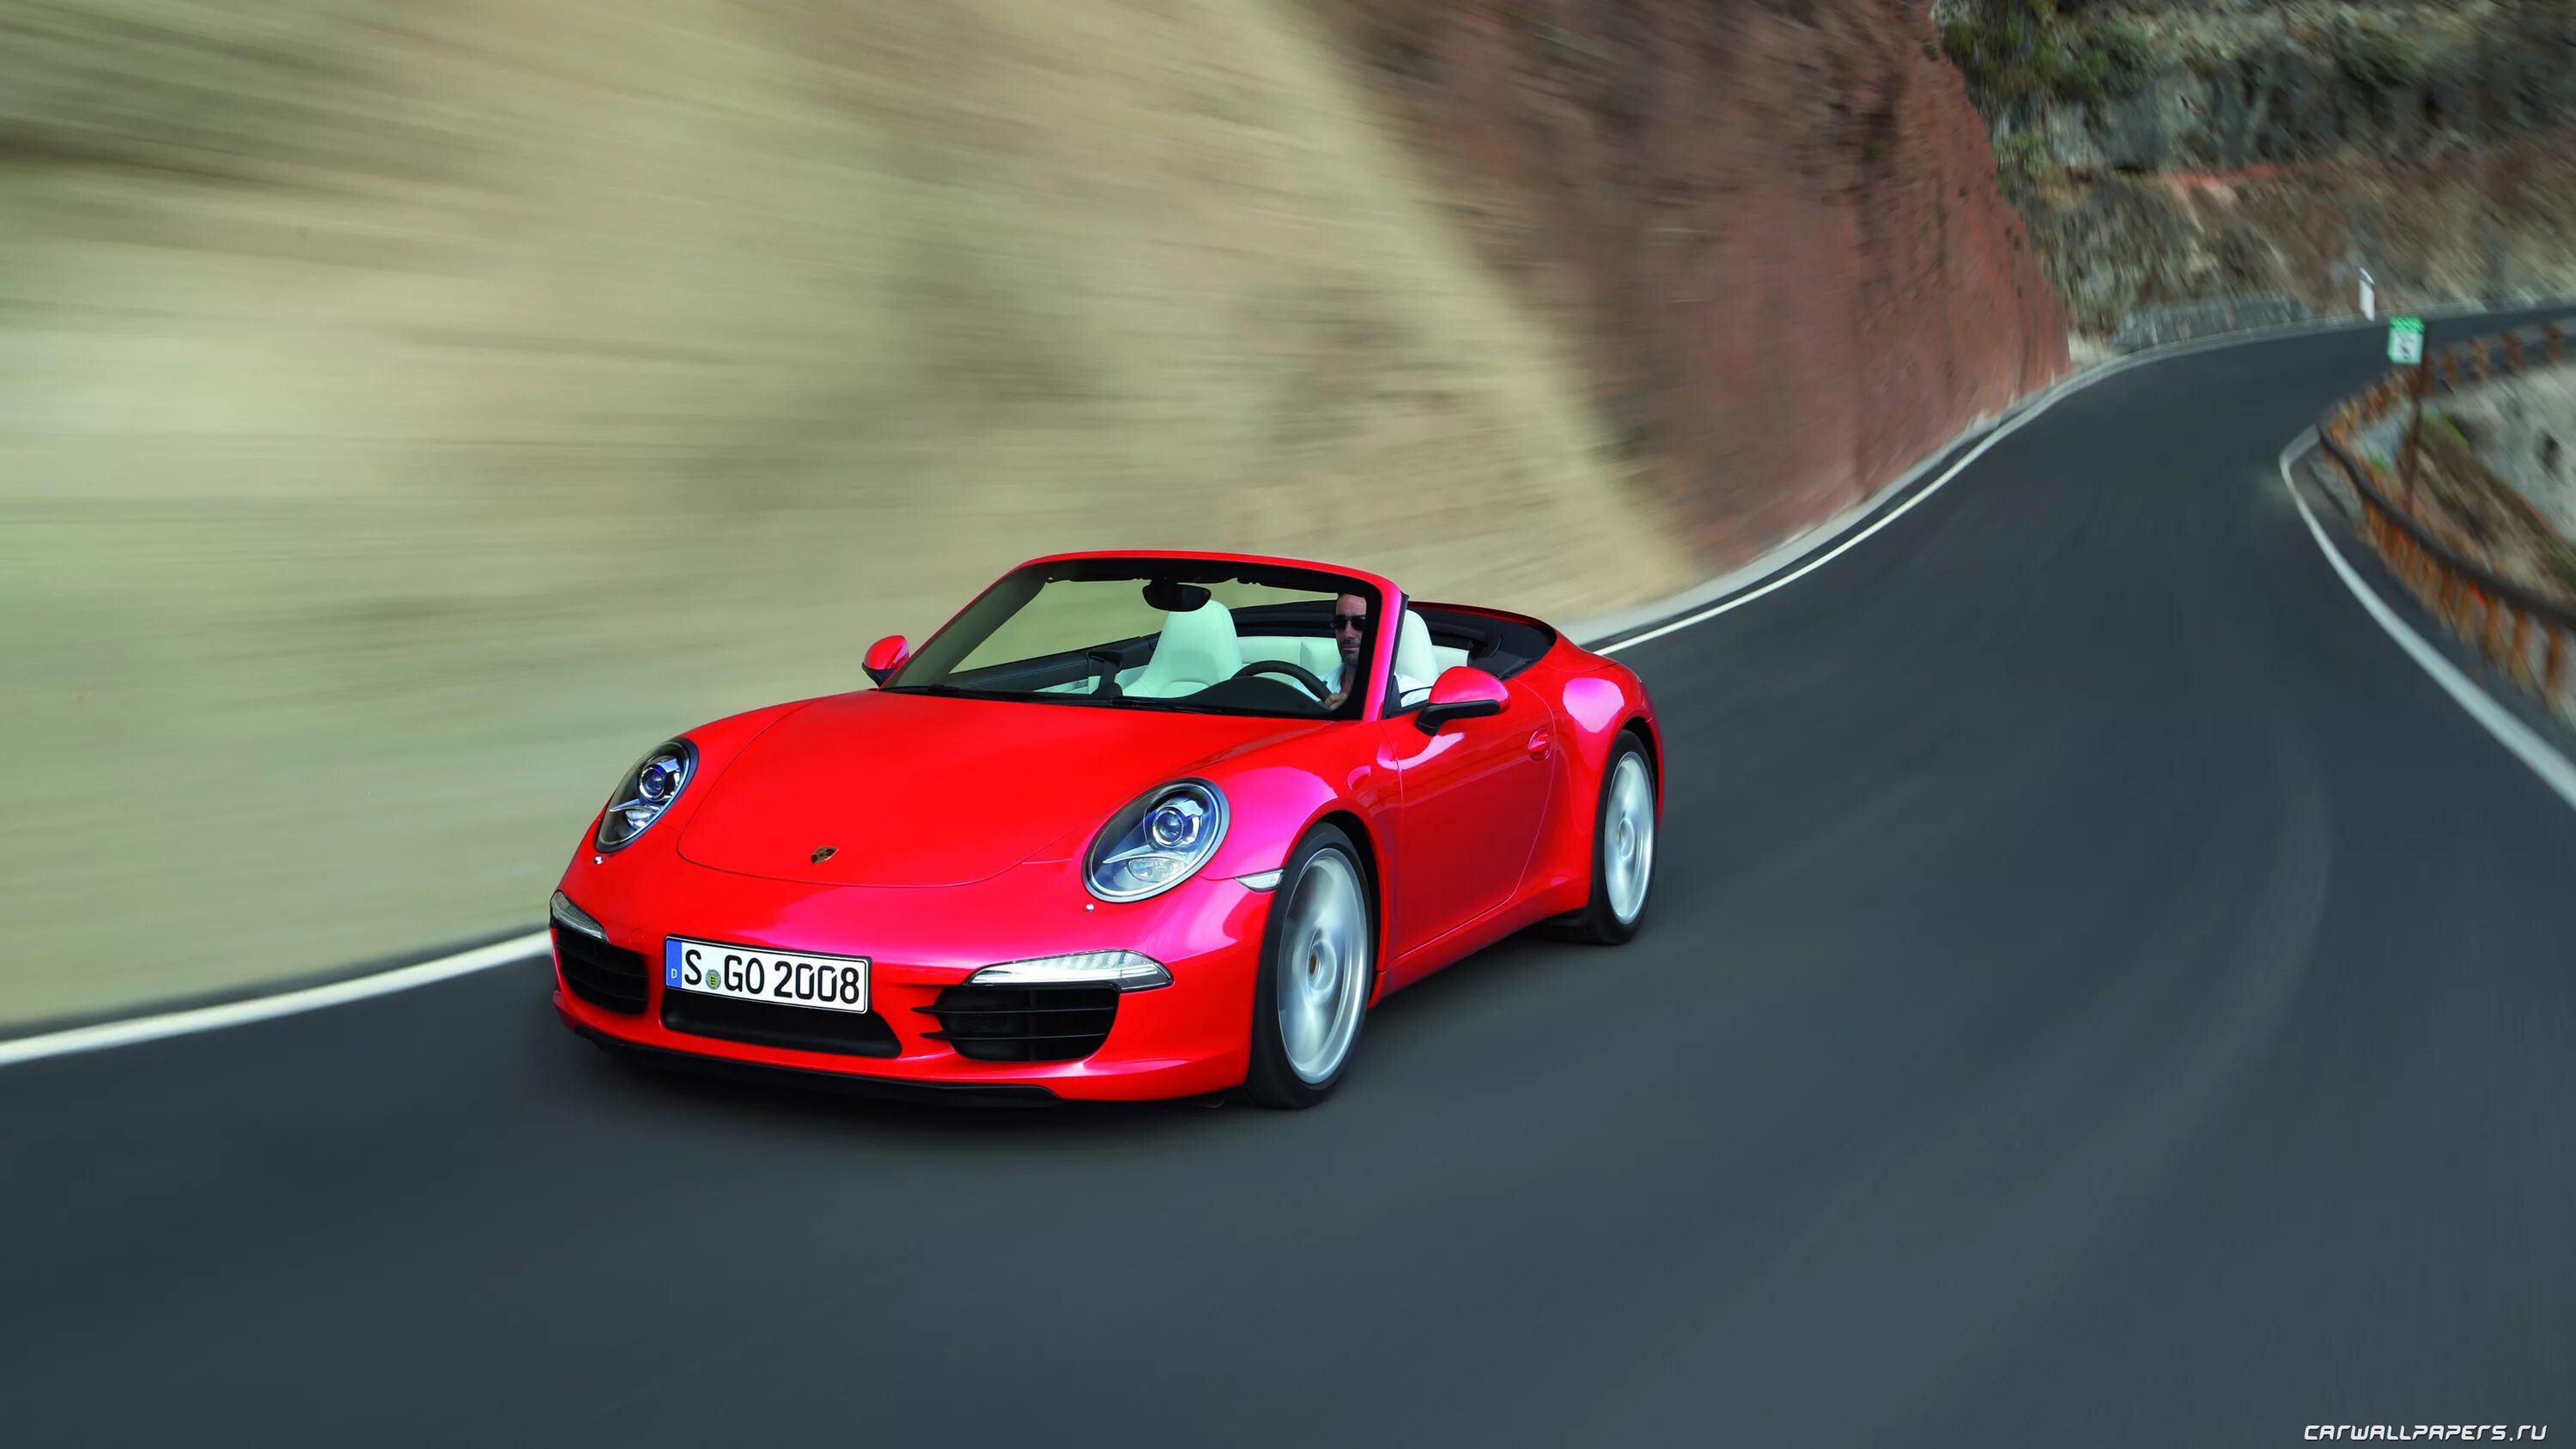 Porsche 911 991 Cabrio. Порше Каррера 911 кабриолет красный. 2012 Porsche 911 4s Cabriolet(991). Porsche 911 GTS Cabriolet 2012.